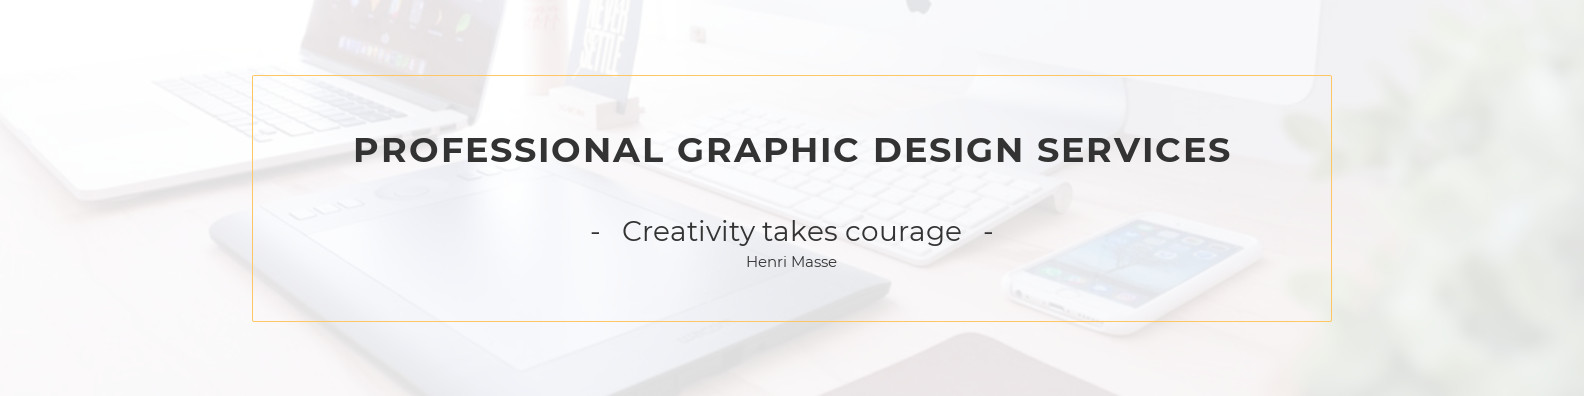 Professional Graphic Design Linkedin Profile BG